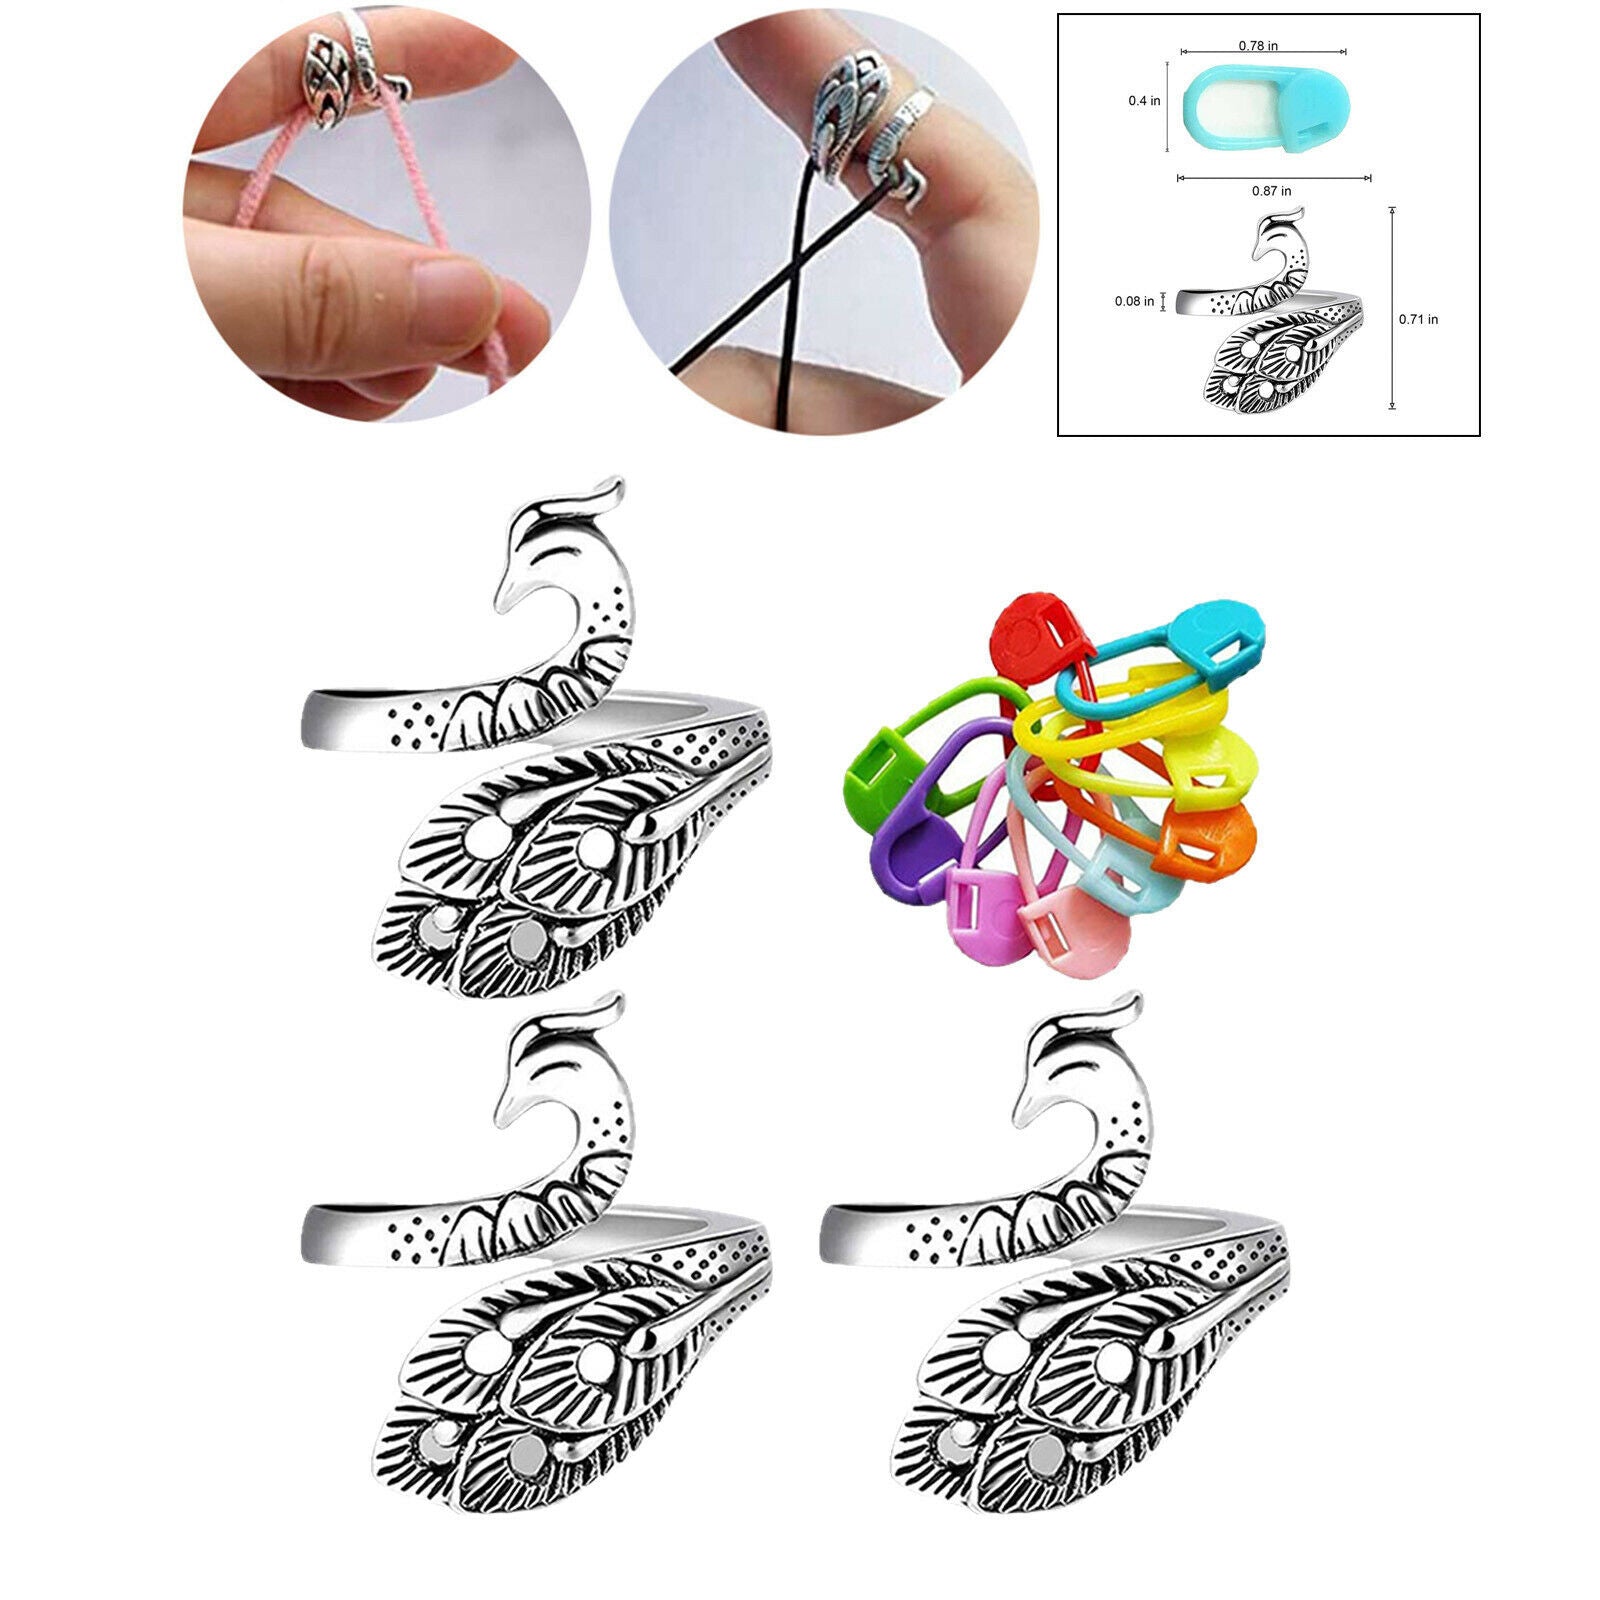 3 Pieces Yarn Guide Finger Holder Adjustable Knitting Loop Crochet Ring,